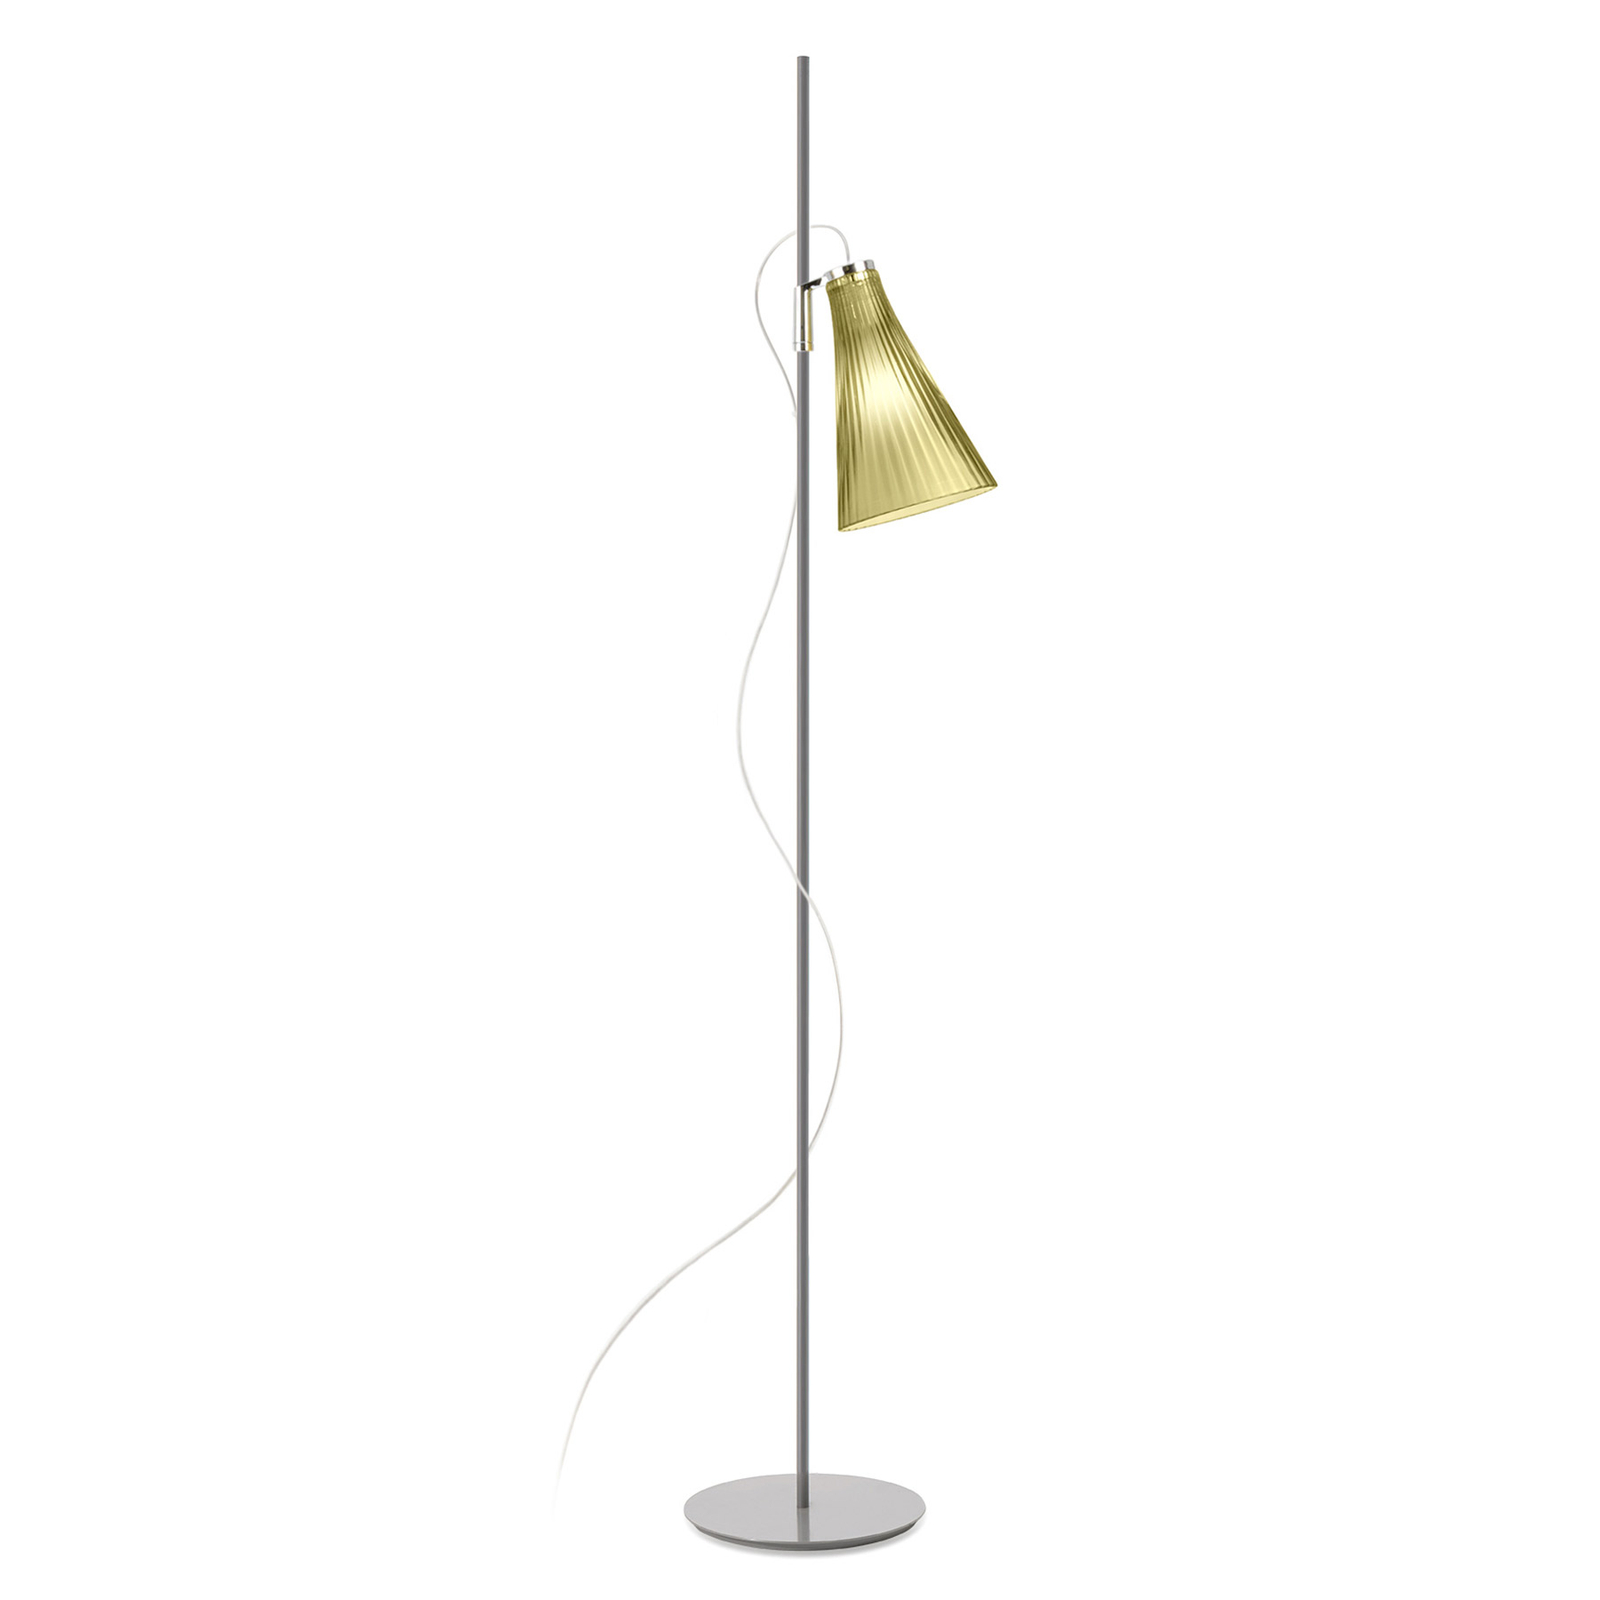 Kartell K-Lux stojacia lampa, 1 svetlo, sivá/zelená